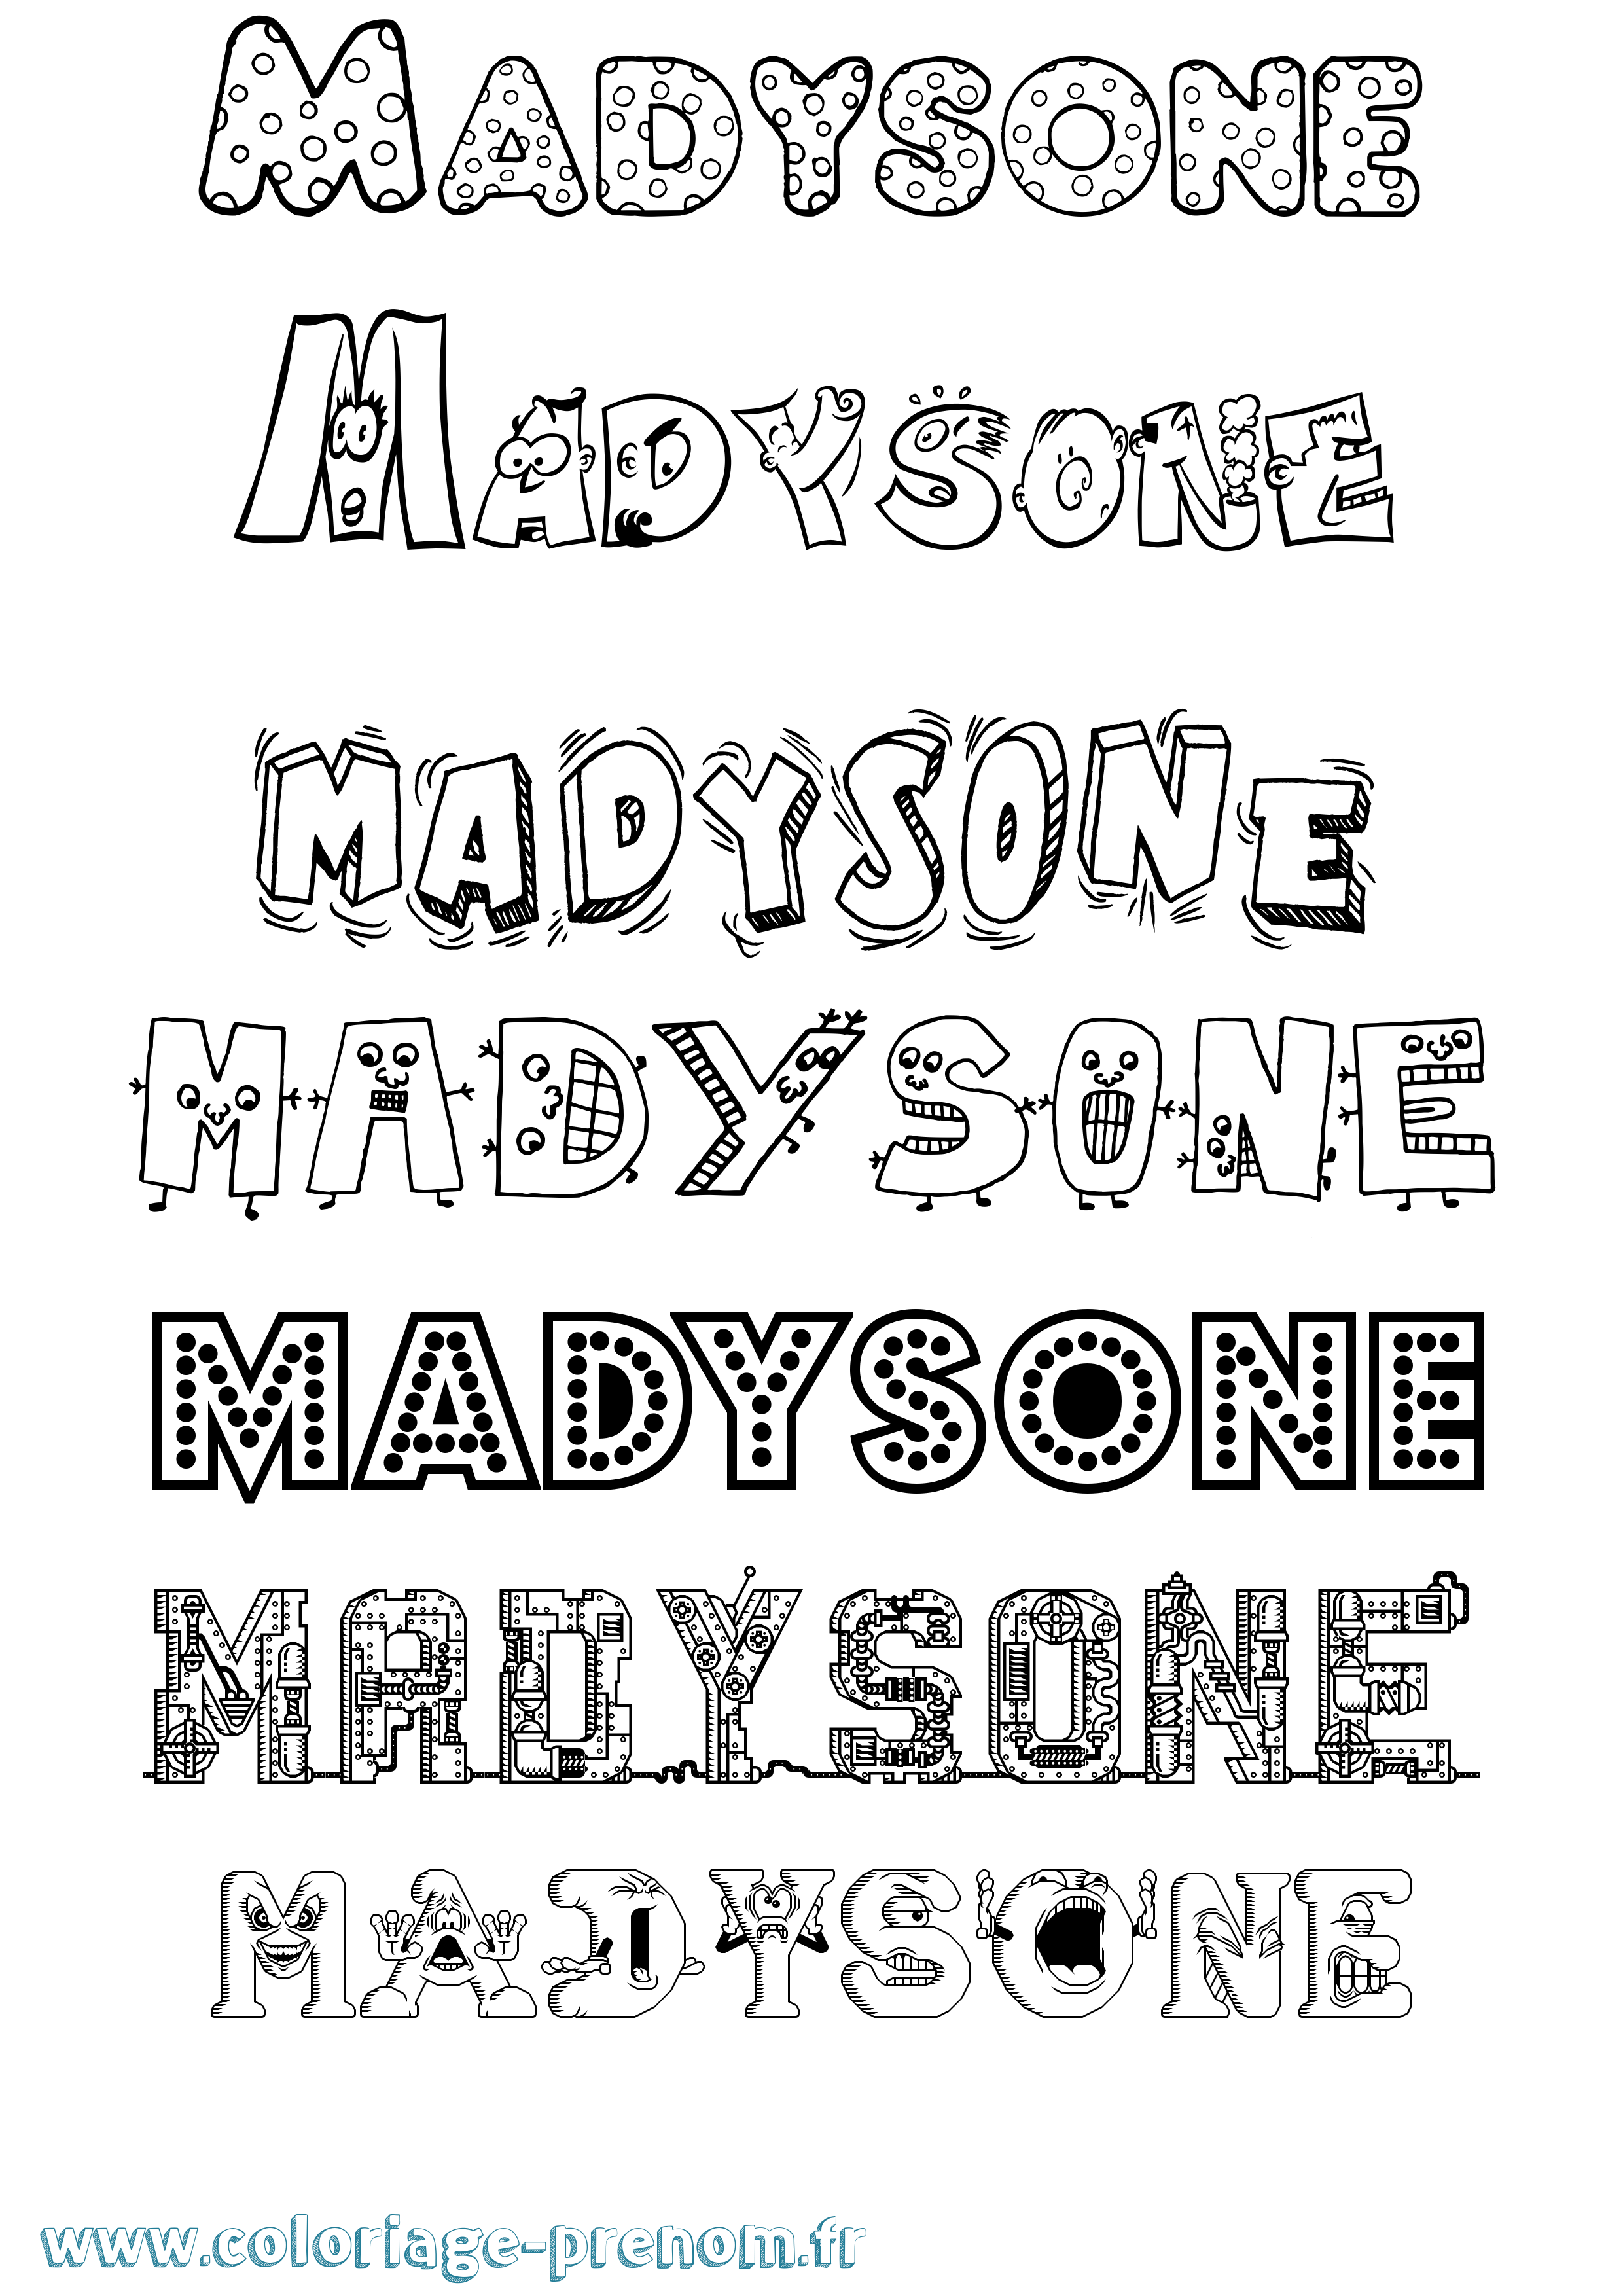 Coloriage prénom Madysone Fun